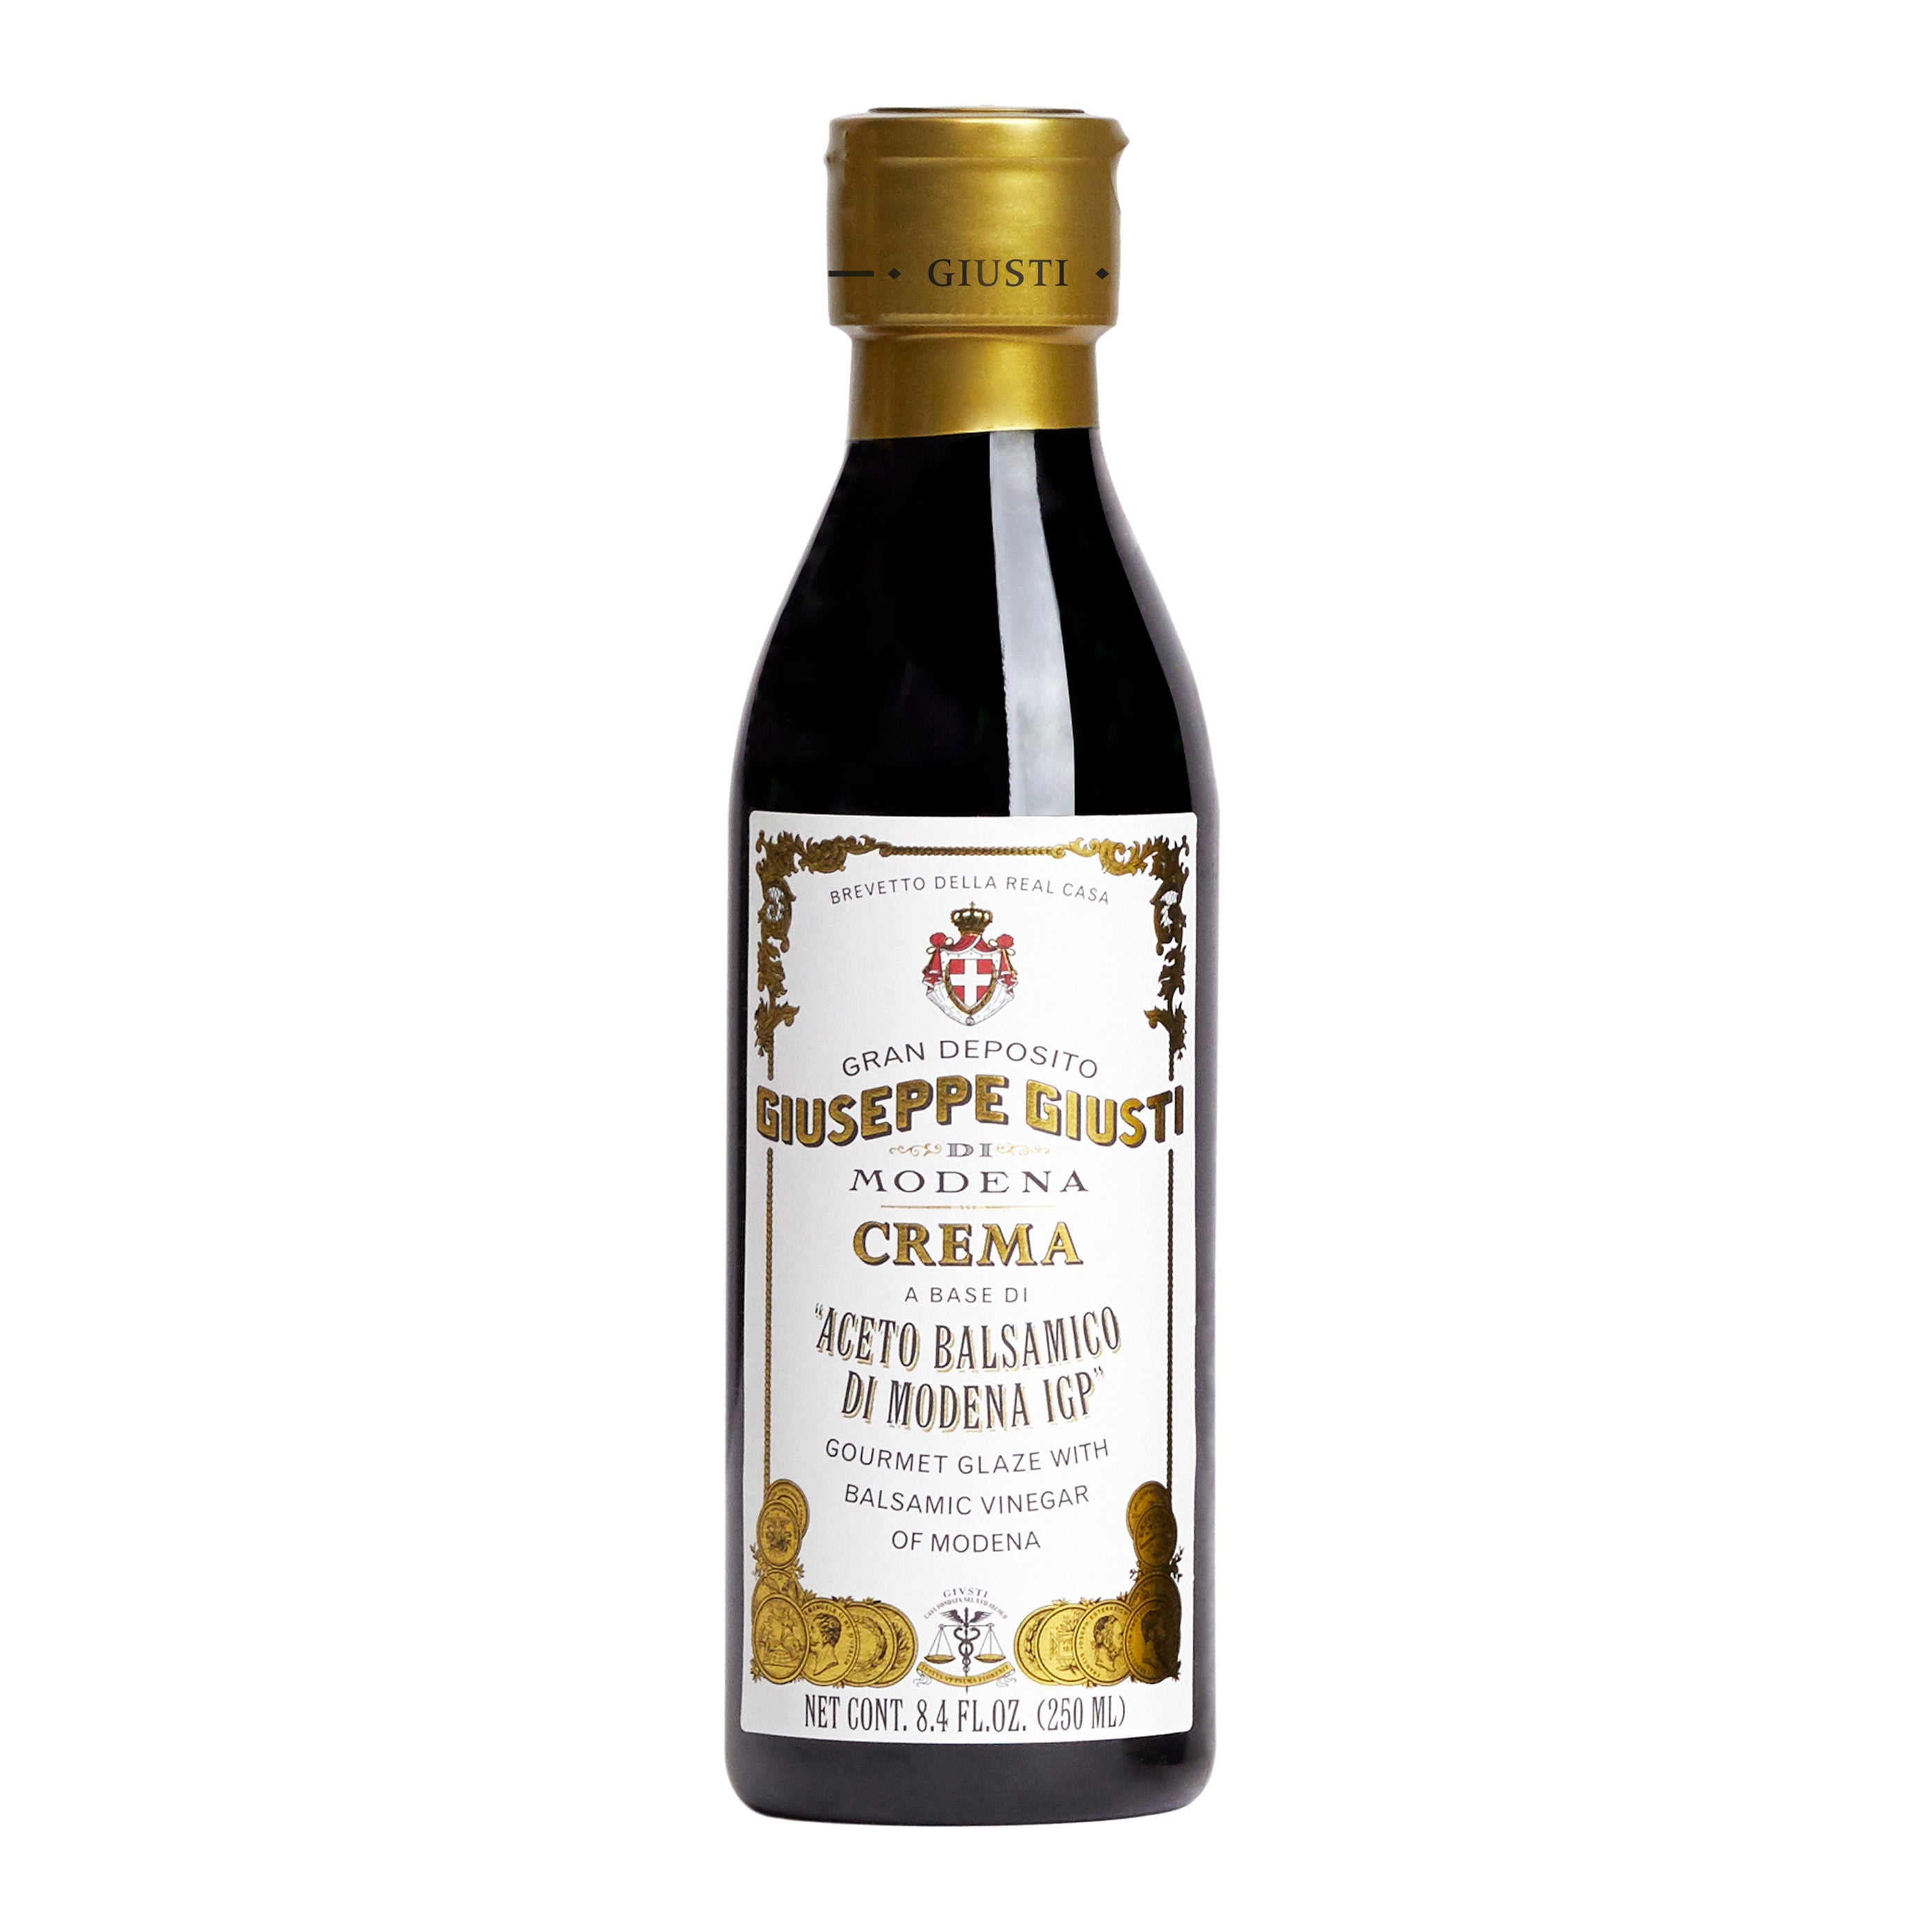 Giusti Crema Balsamic Vinegar Glaze Reduction of Modena